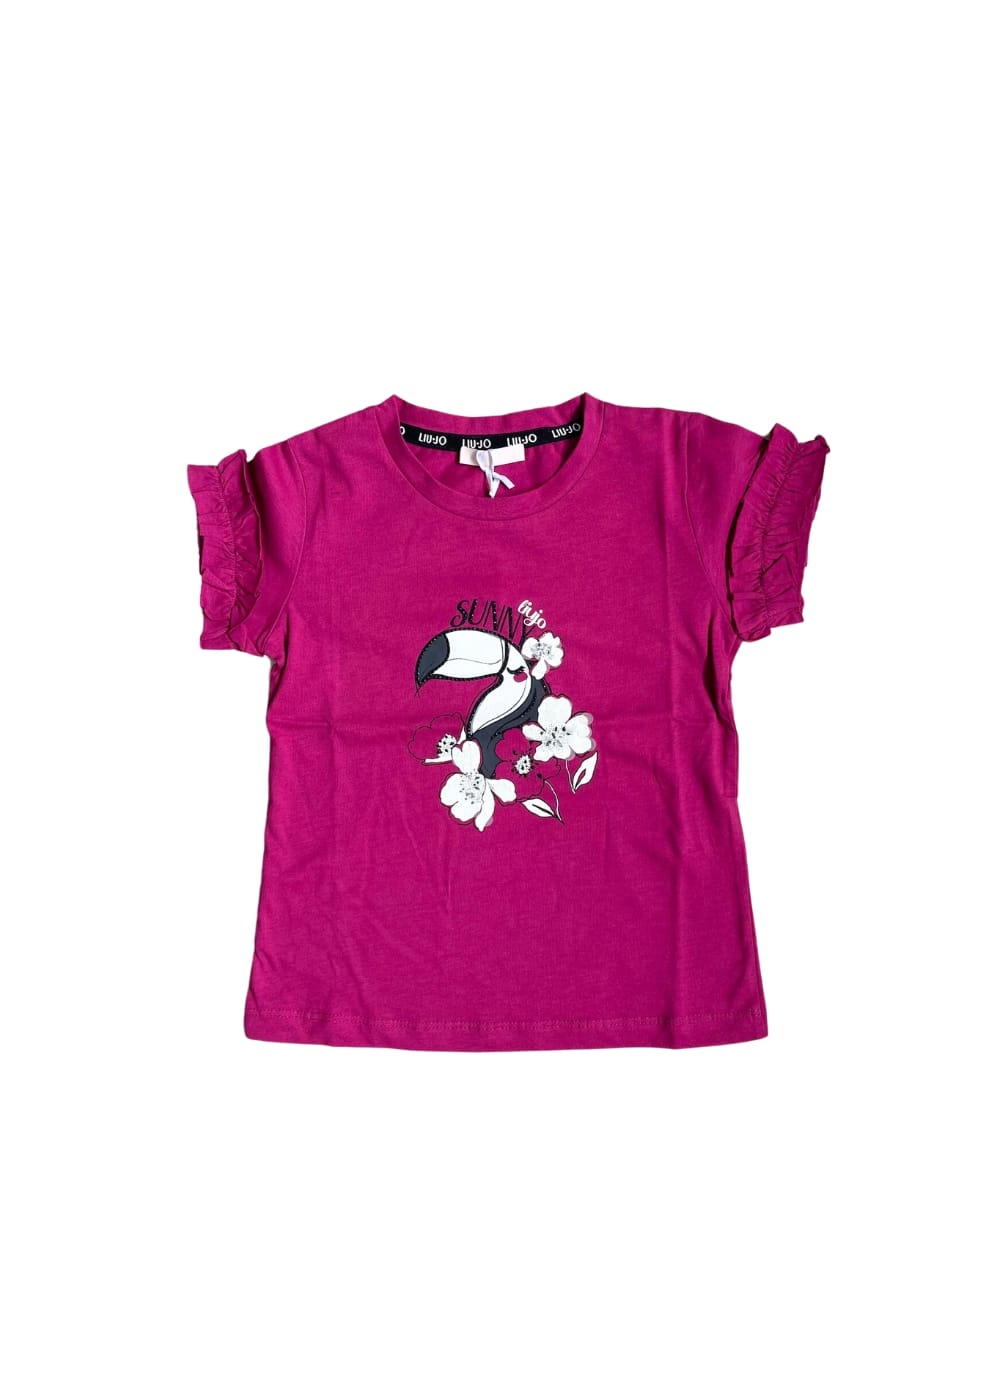 Featured image for “Liu Jo T-Shirt con Stampa Tucano”